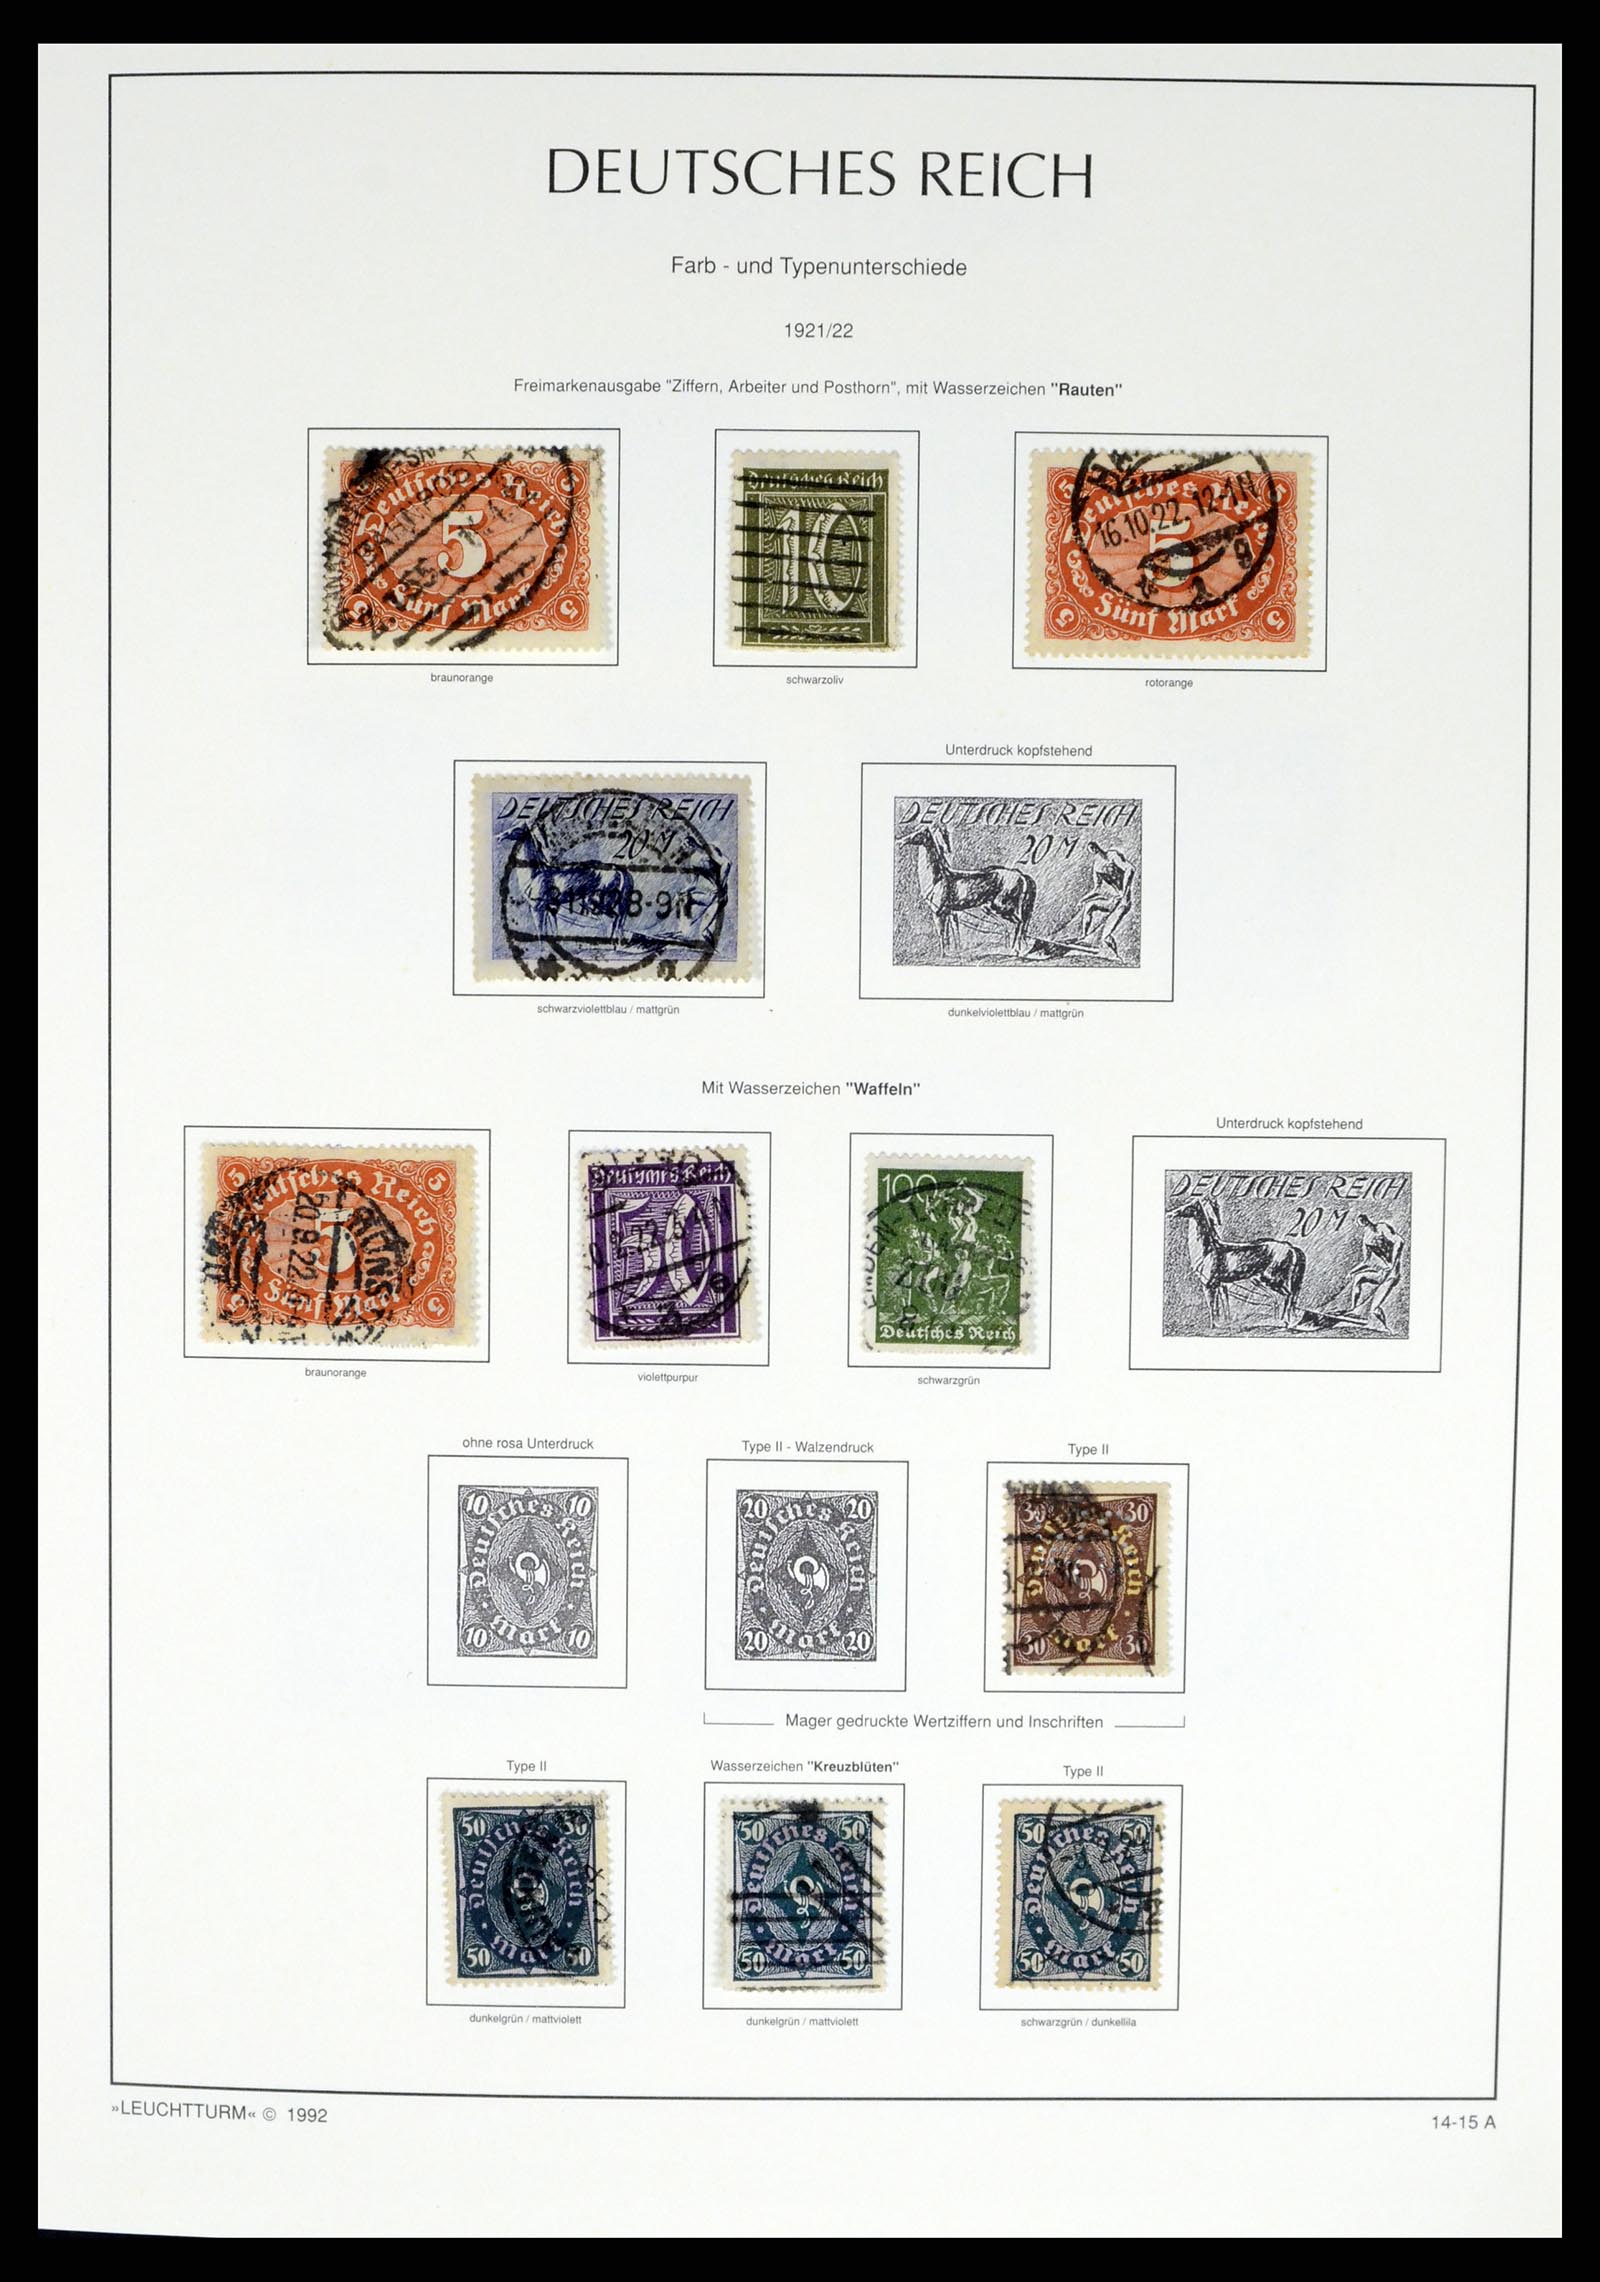 37497 029 - Stamp collection 37497 German Reich 1872-1945.